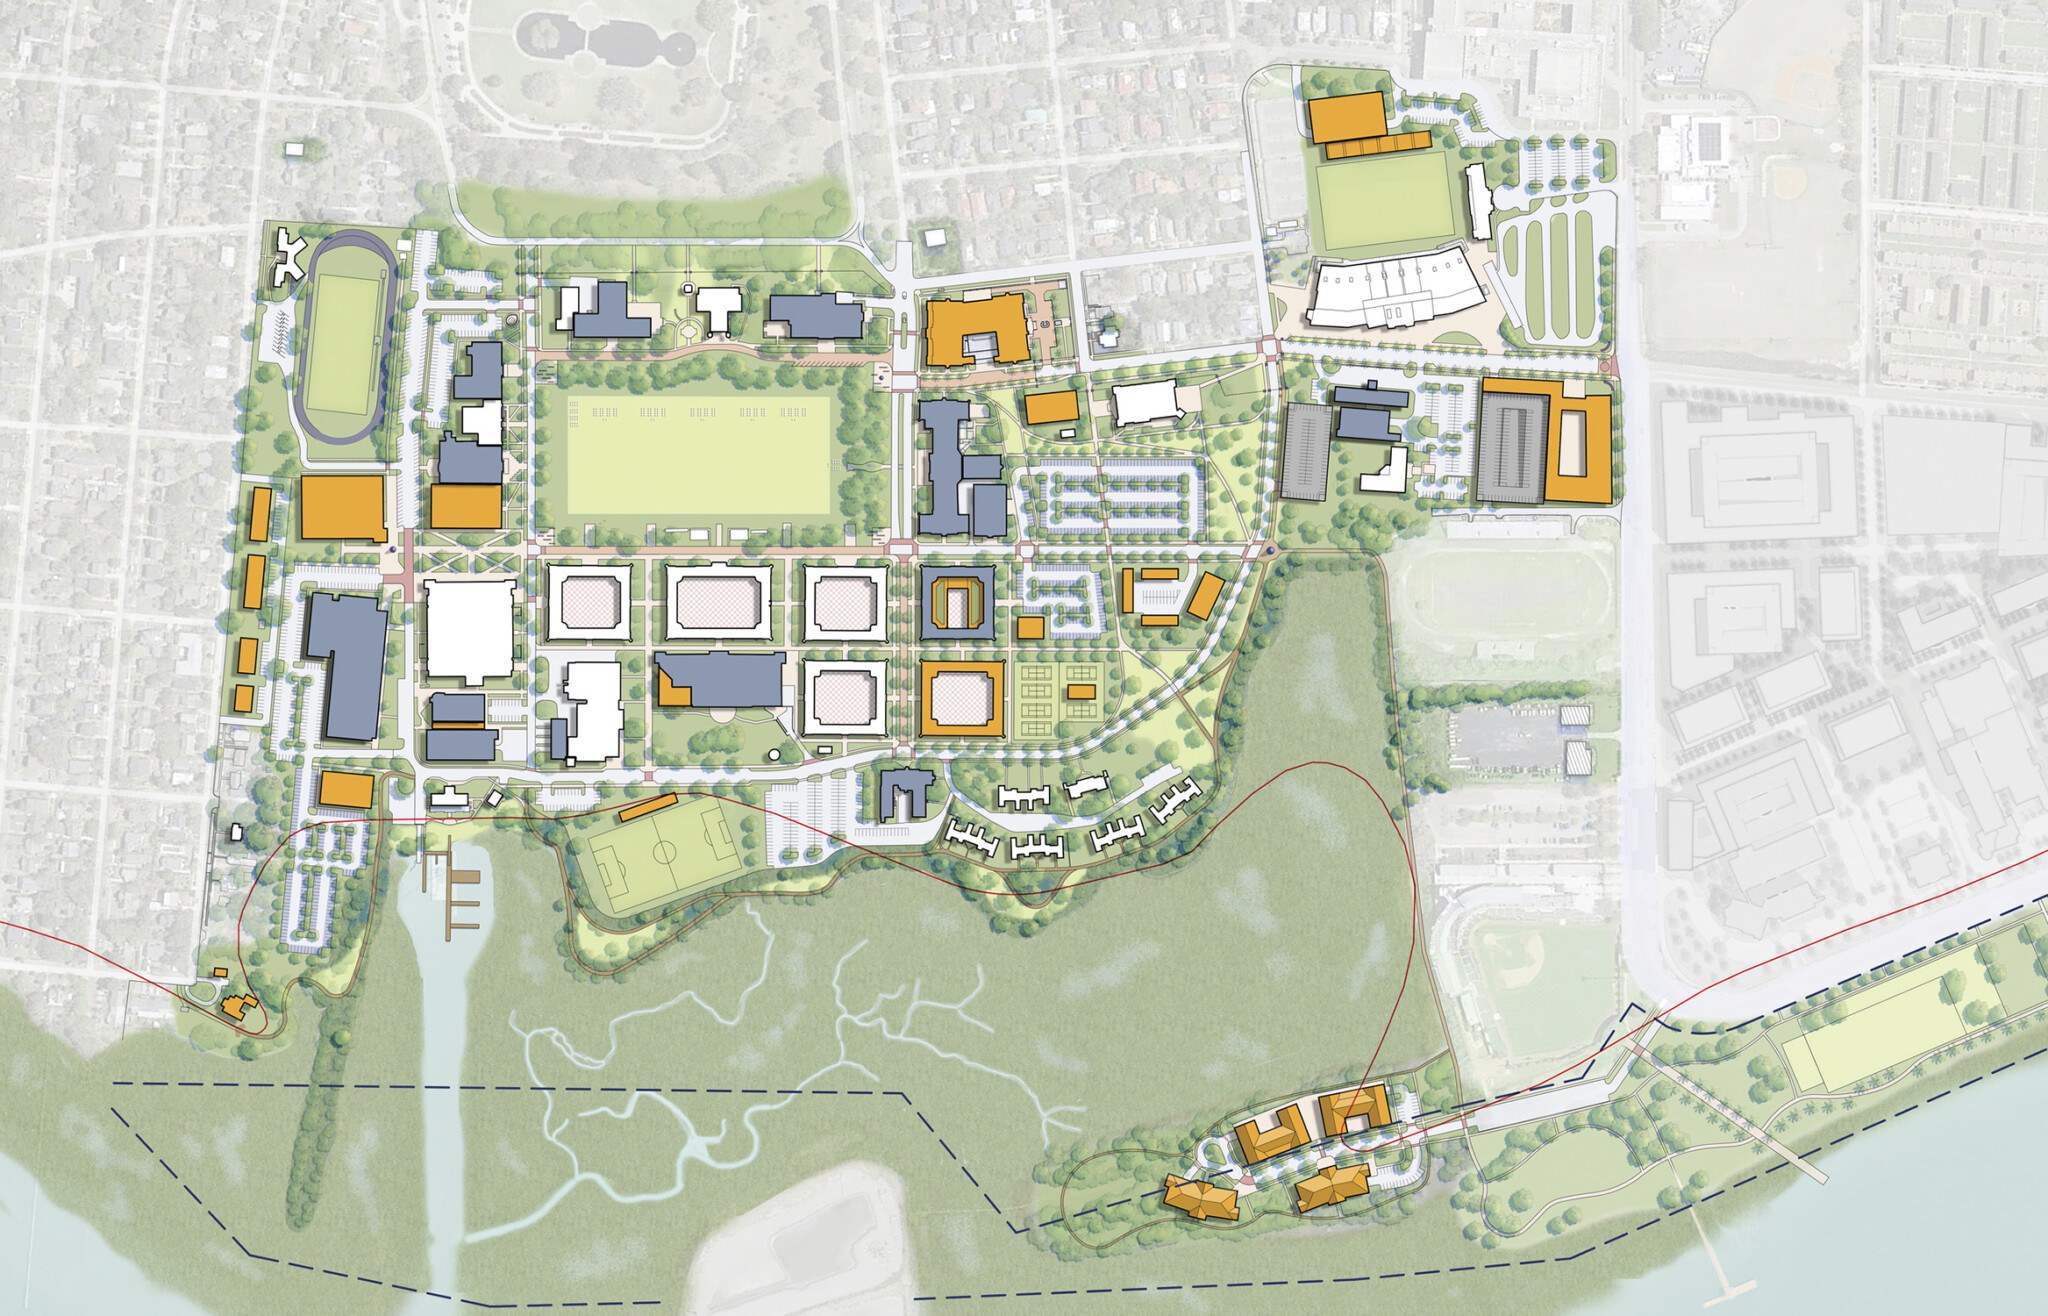 The Citadel Campus Master Plan 2048x1316 